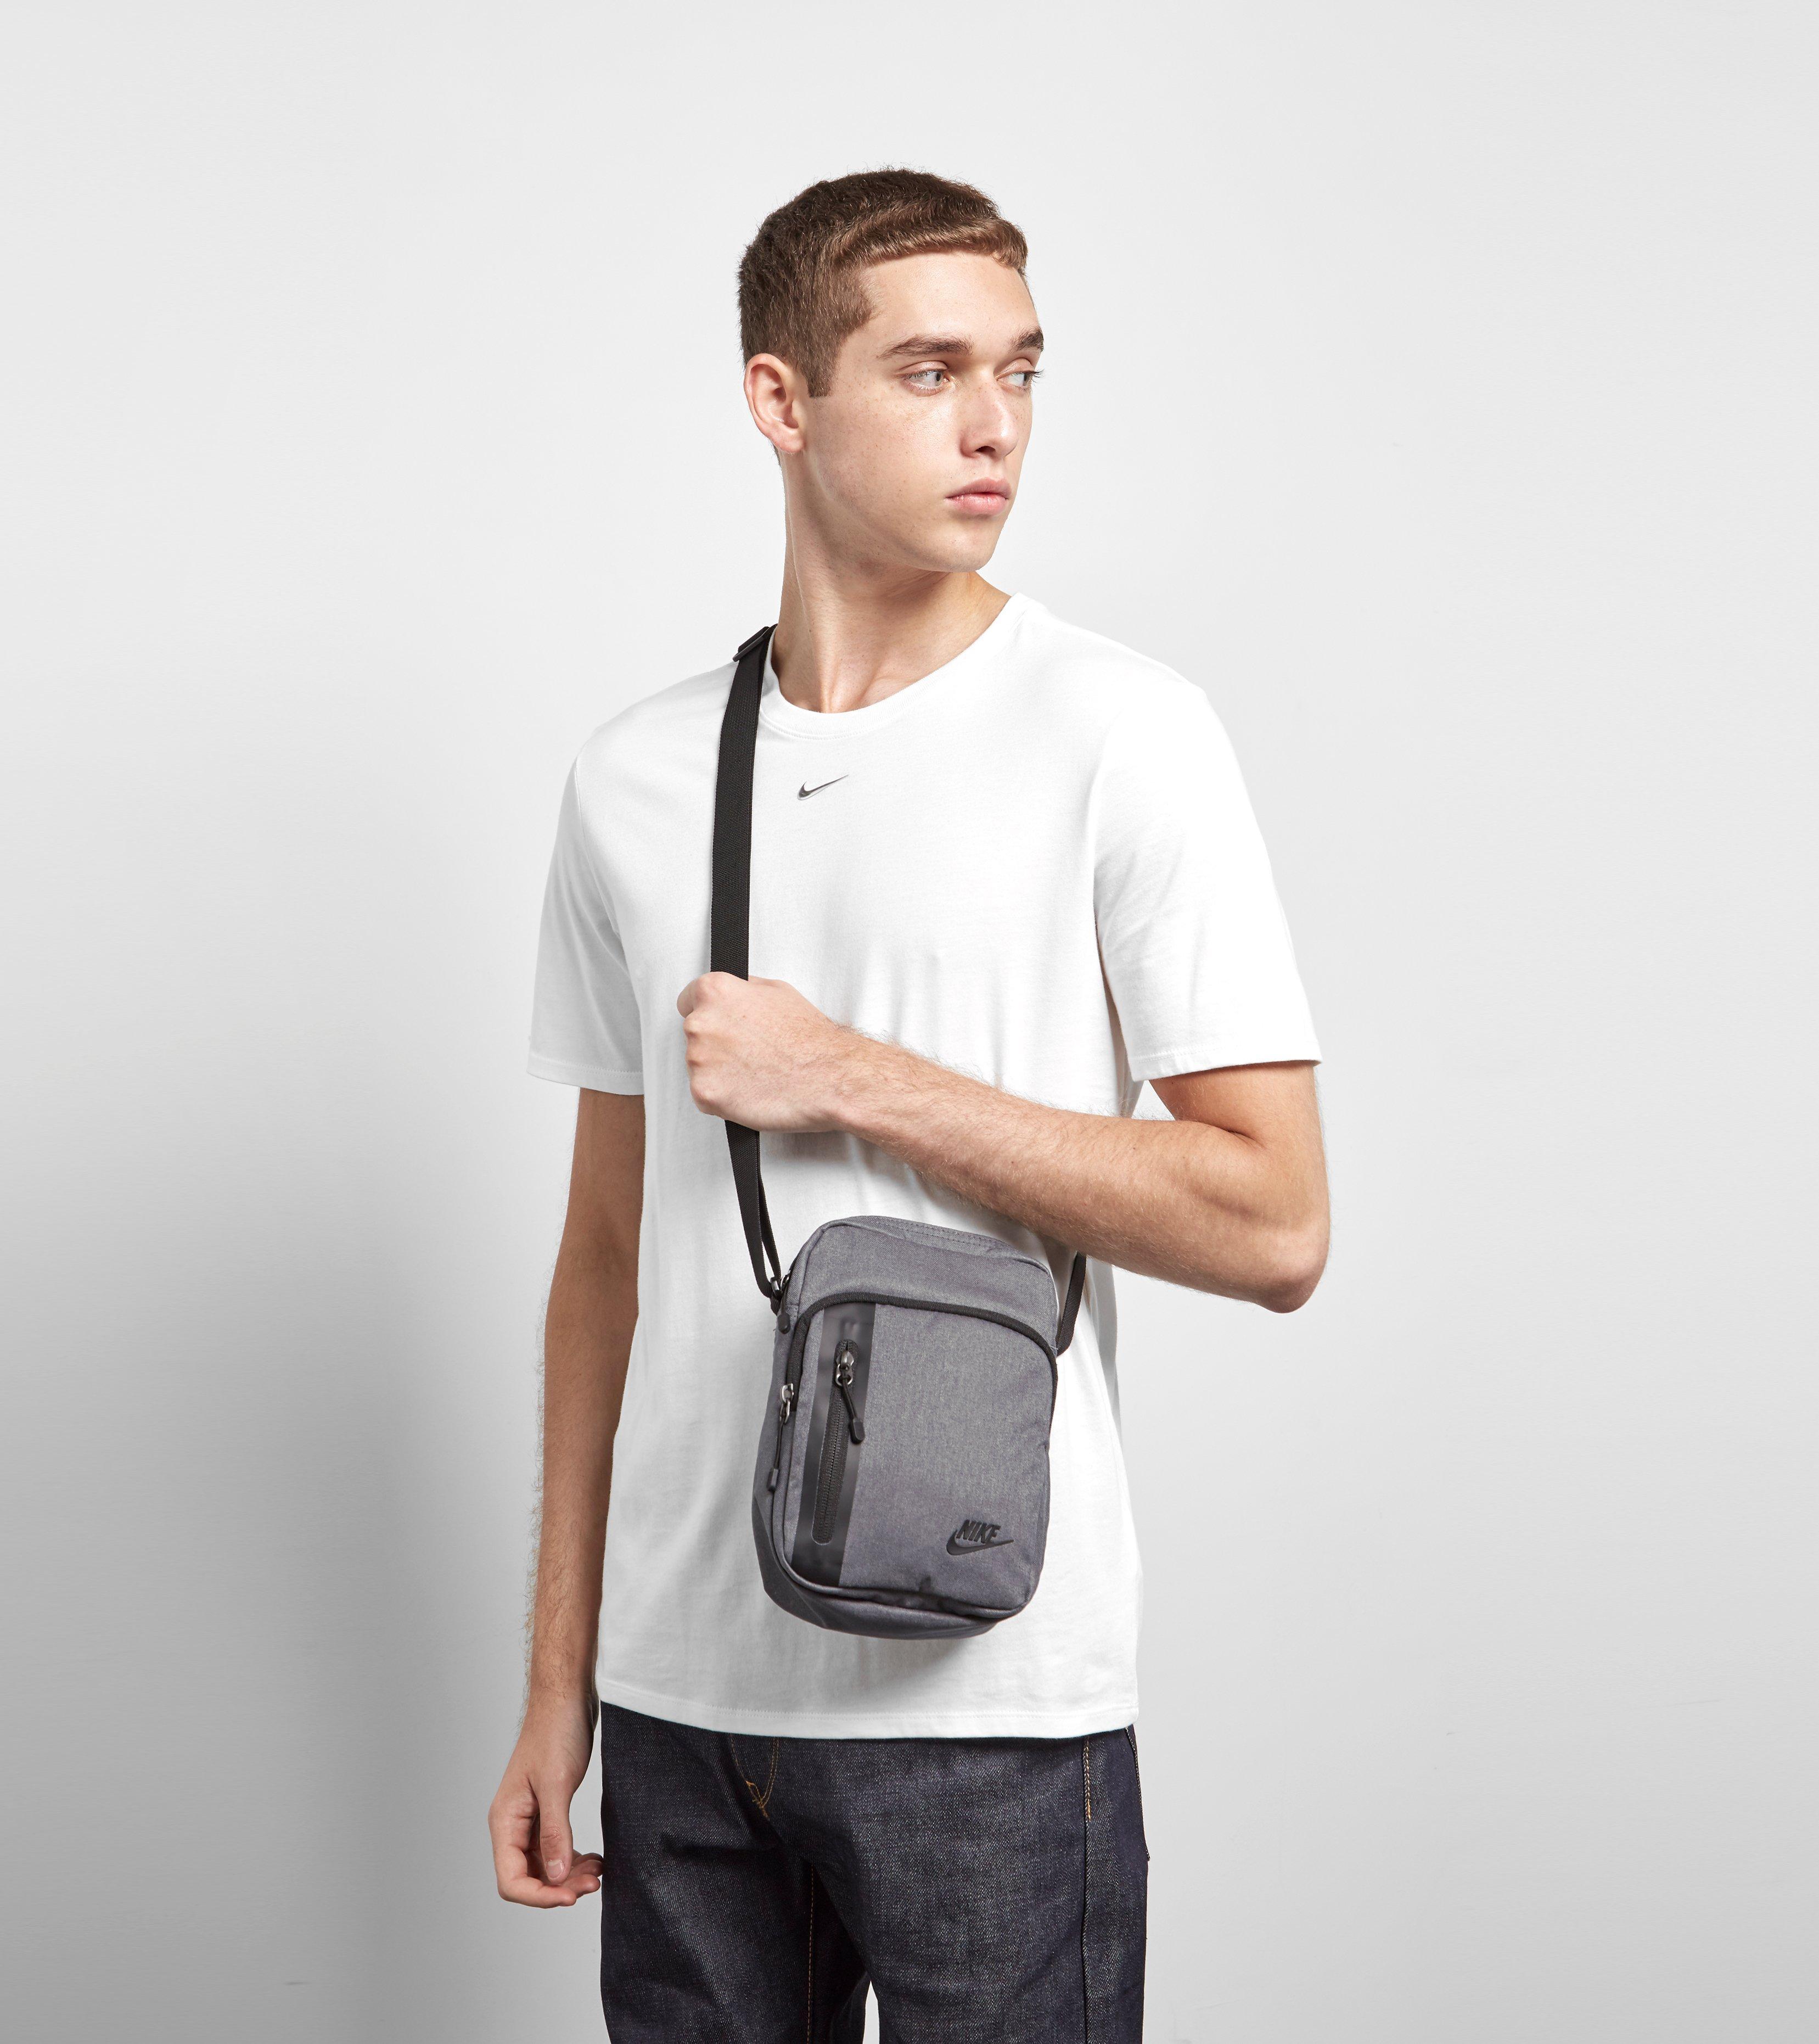 Nike Synthetic Core Small Crossbody Bag in Dark Grey (Gray) for Men - Lyst